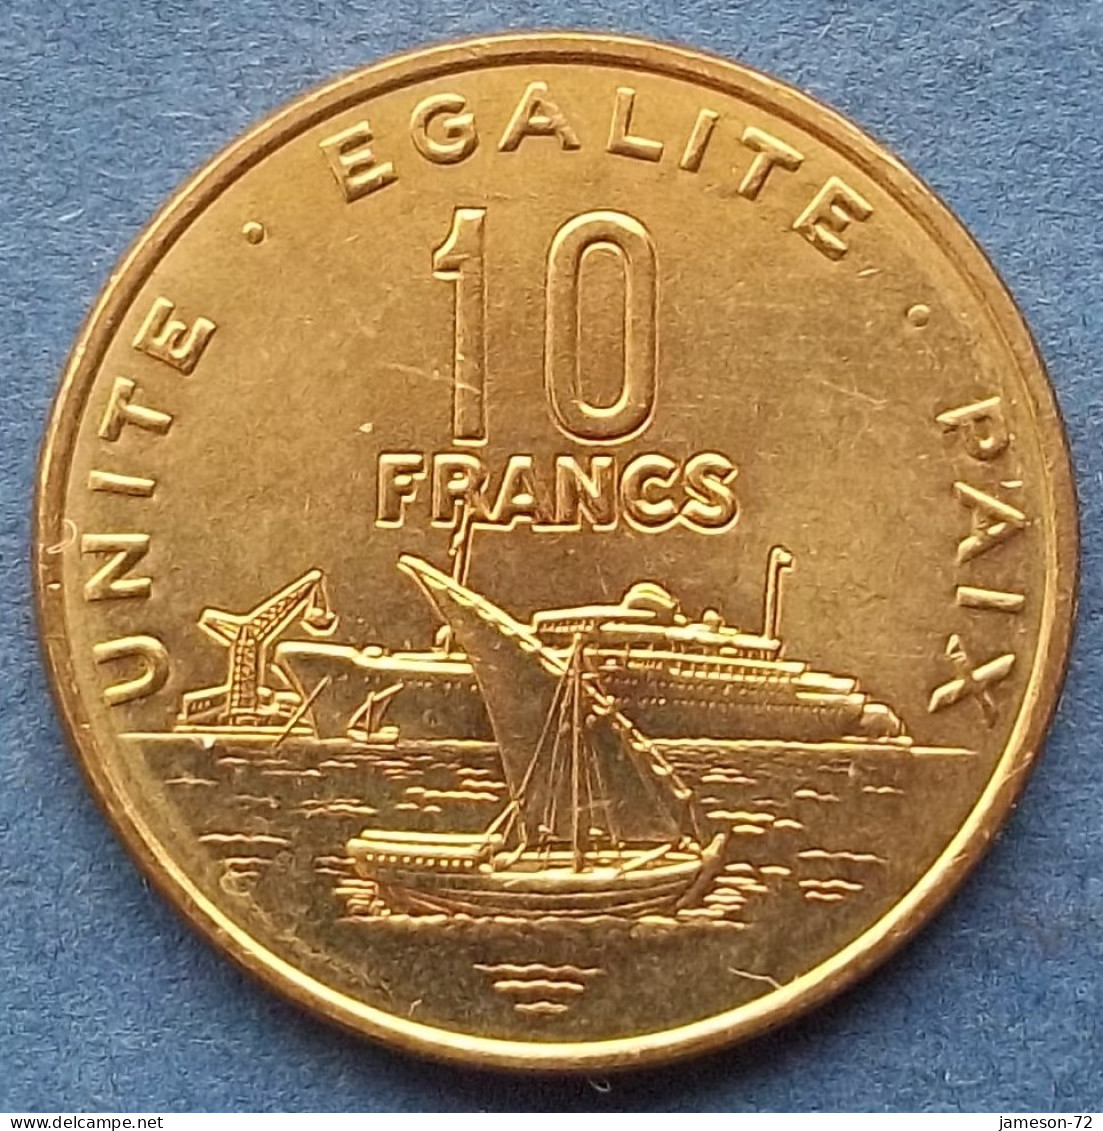 DJIBOUTI - 10 Francs 2013 "Sailboat" KM# 23 Republic Standard Coinage - Edelweiss Coins - Djibouti